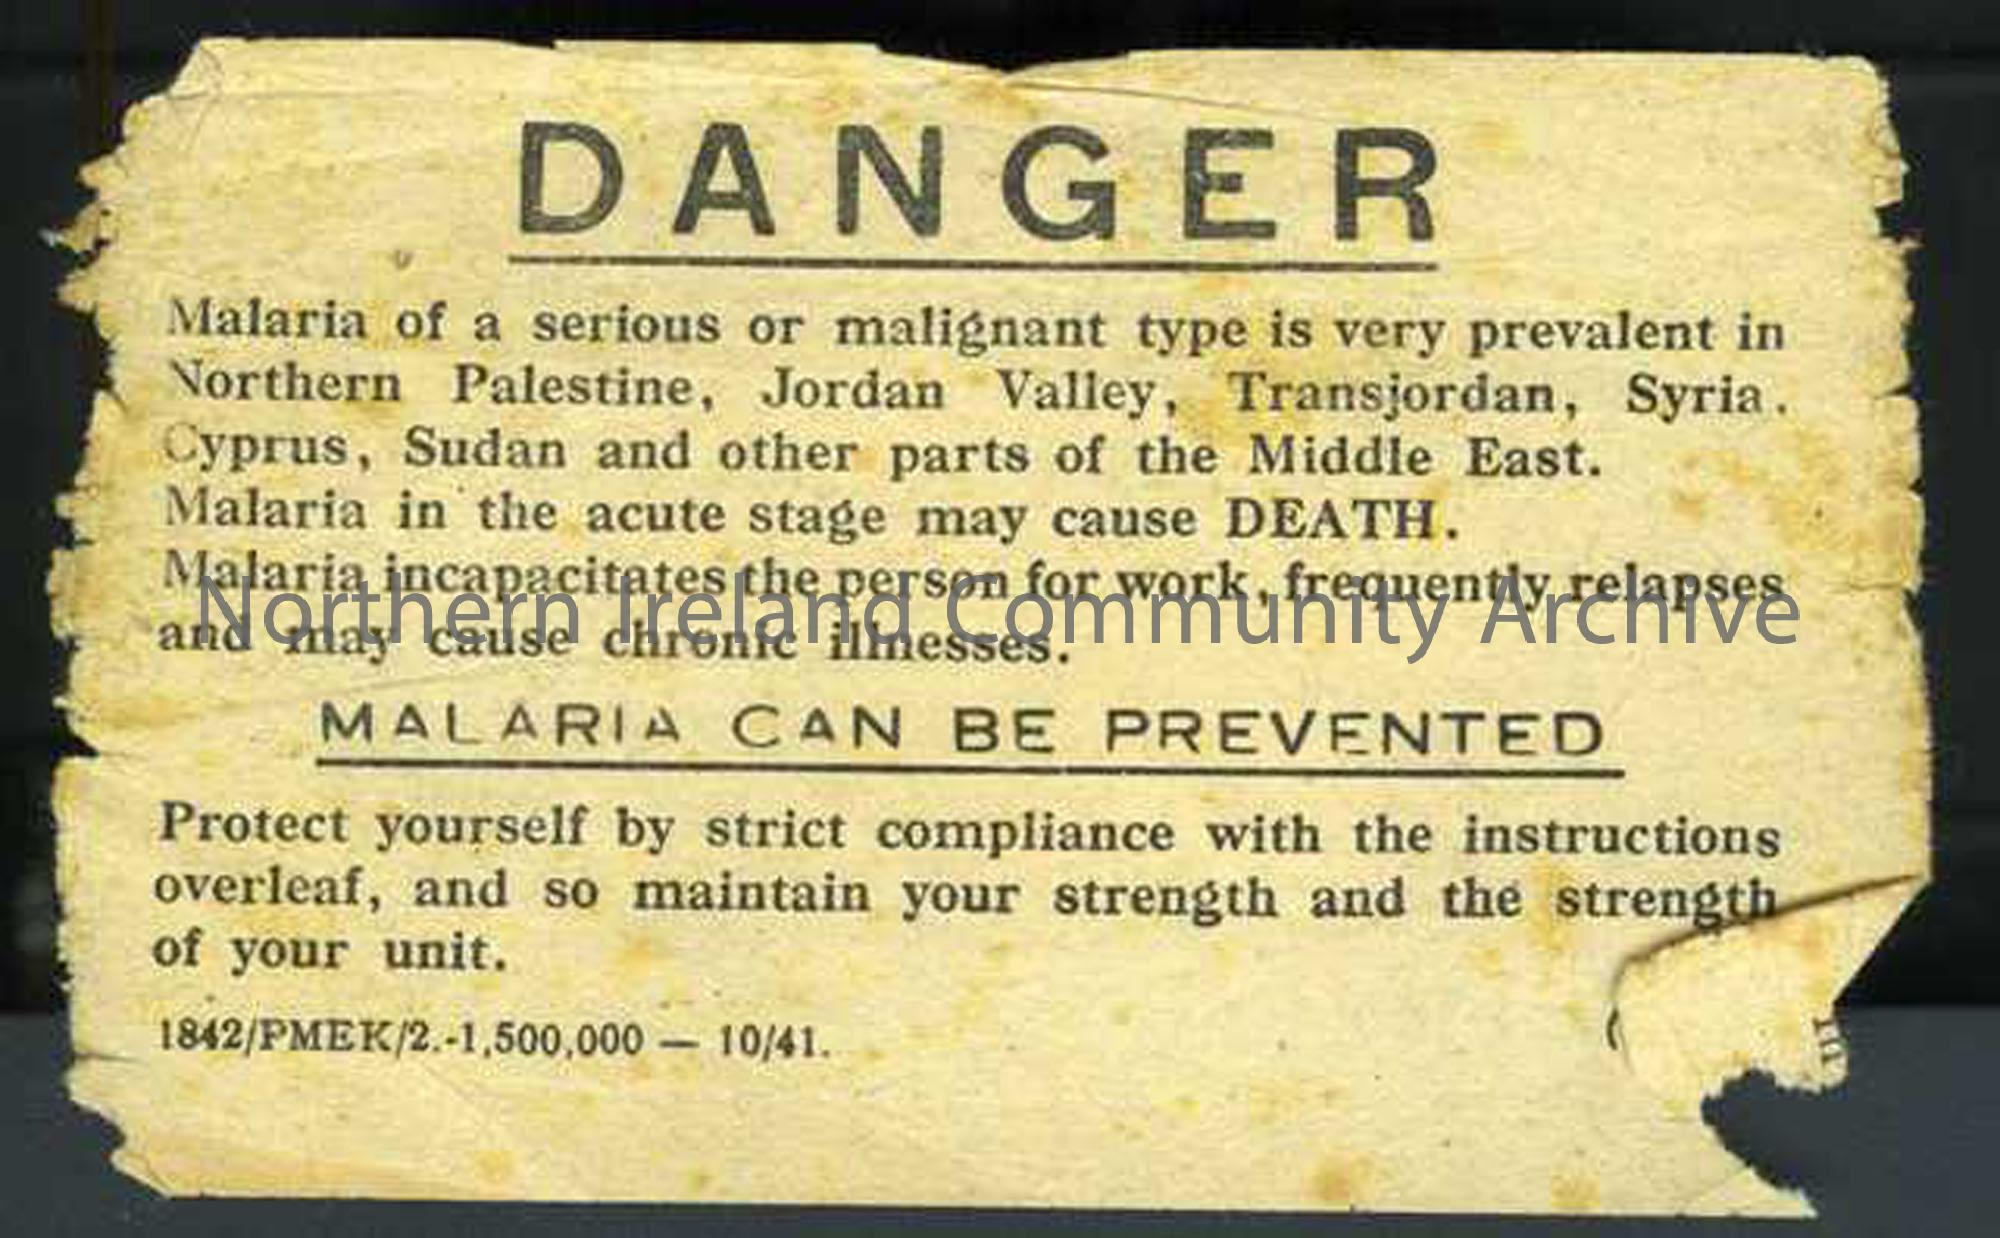 Danger of malaria leaflet